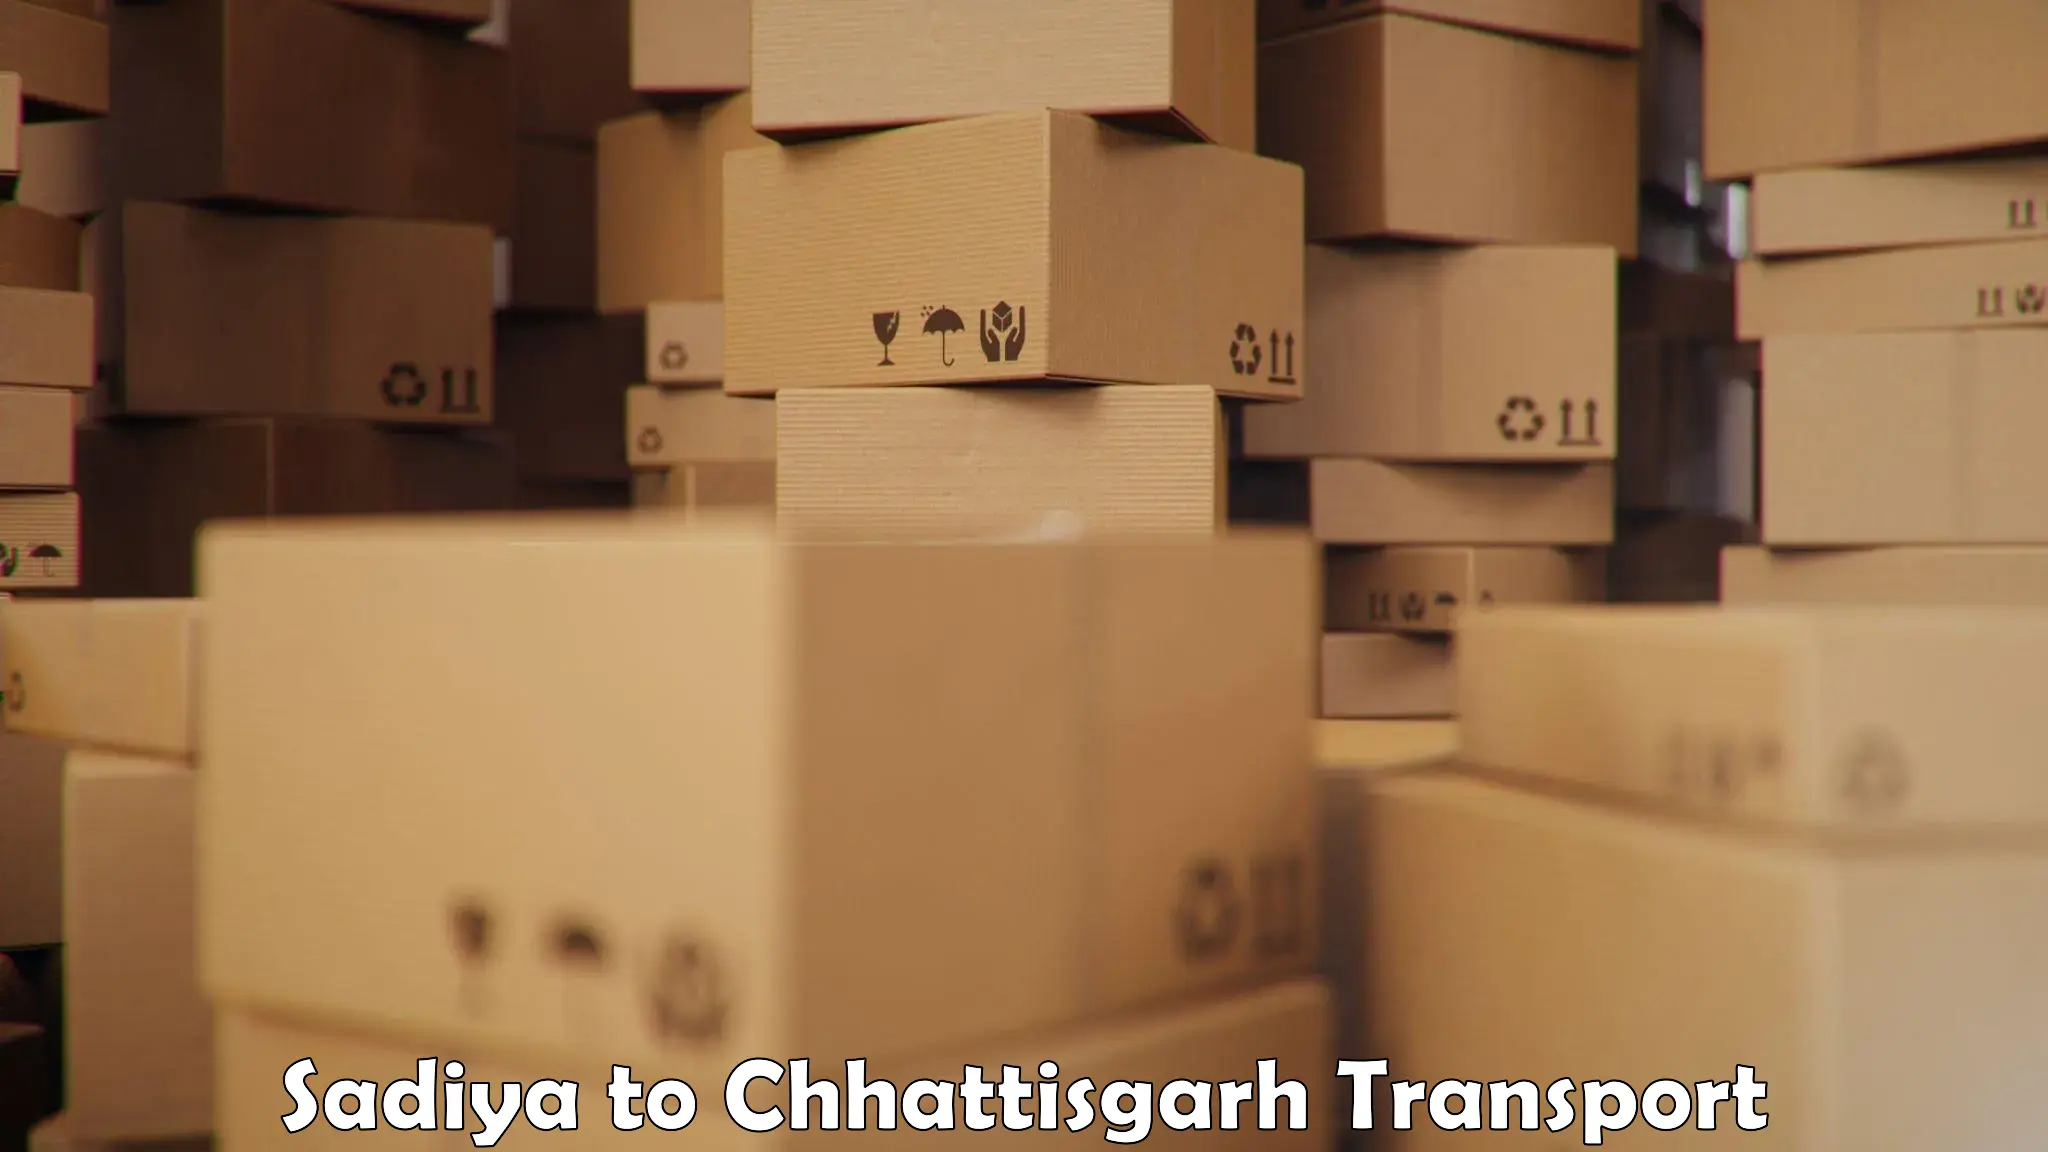 Truck transport companies in India in Sadiya to Patna Chhattisgarh